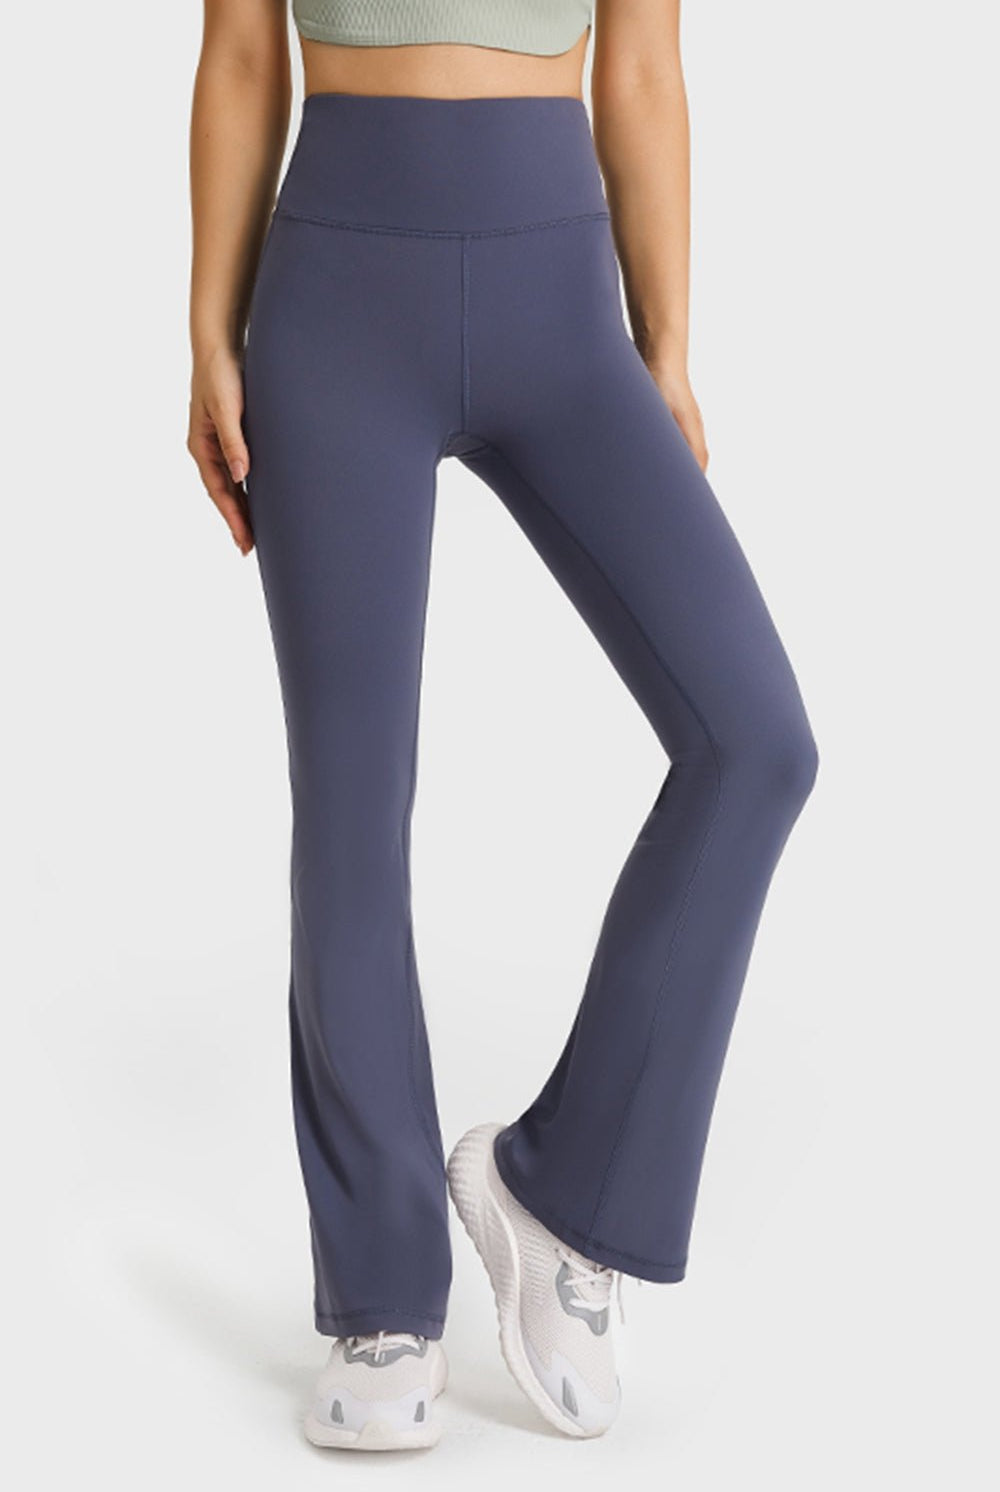 Elastic Waist Flare Yoga Pants - GemThreads Boutique Elastic Waist Flare Yoga Pants